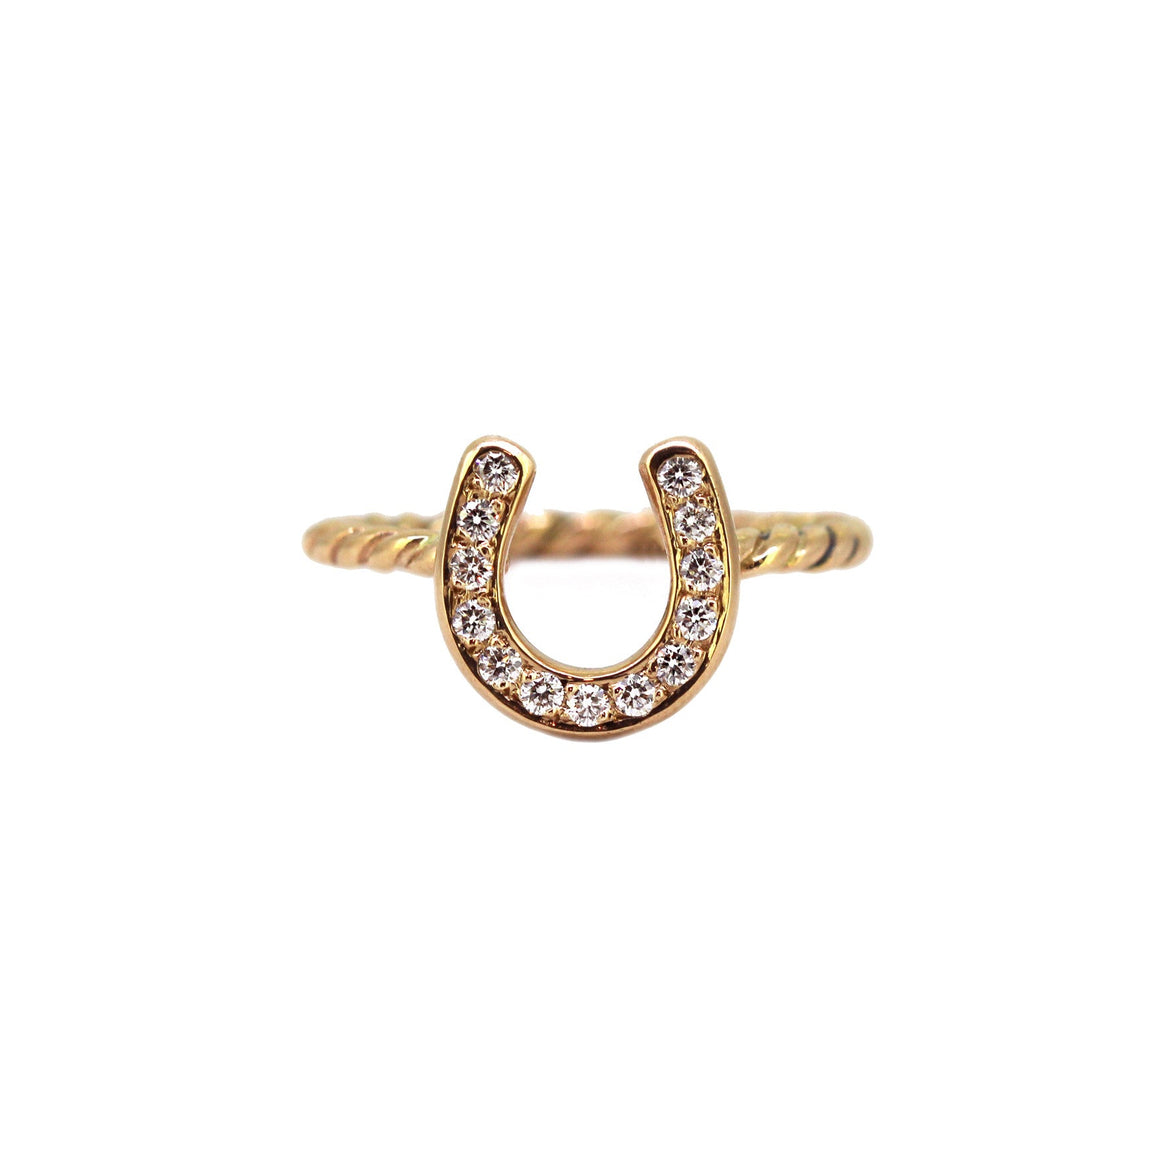 Gold horseshoe ring on a twist pattern band